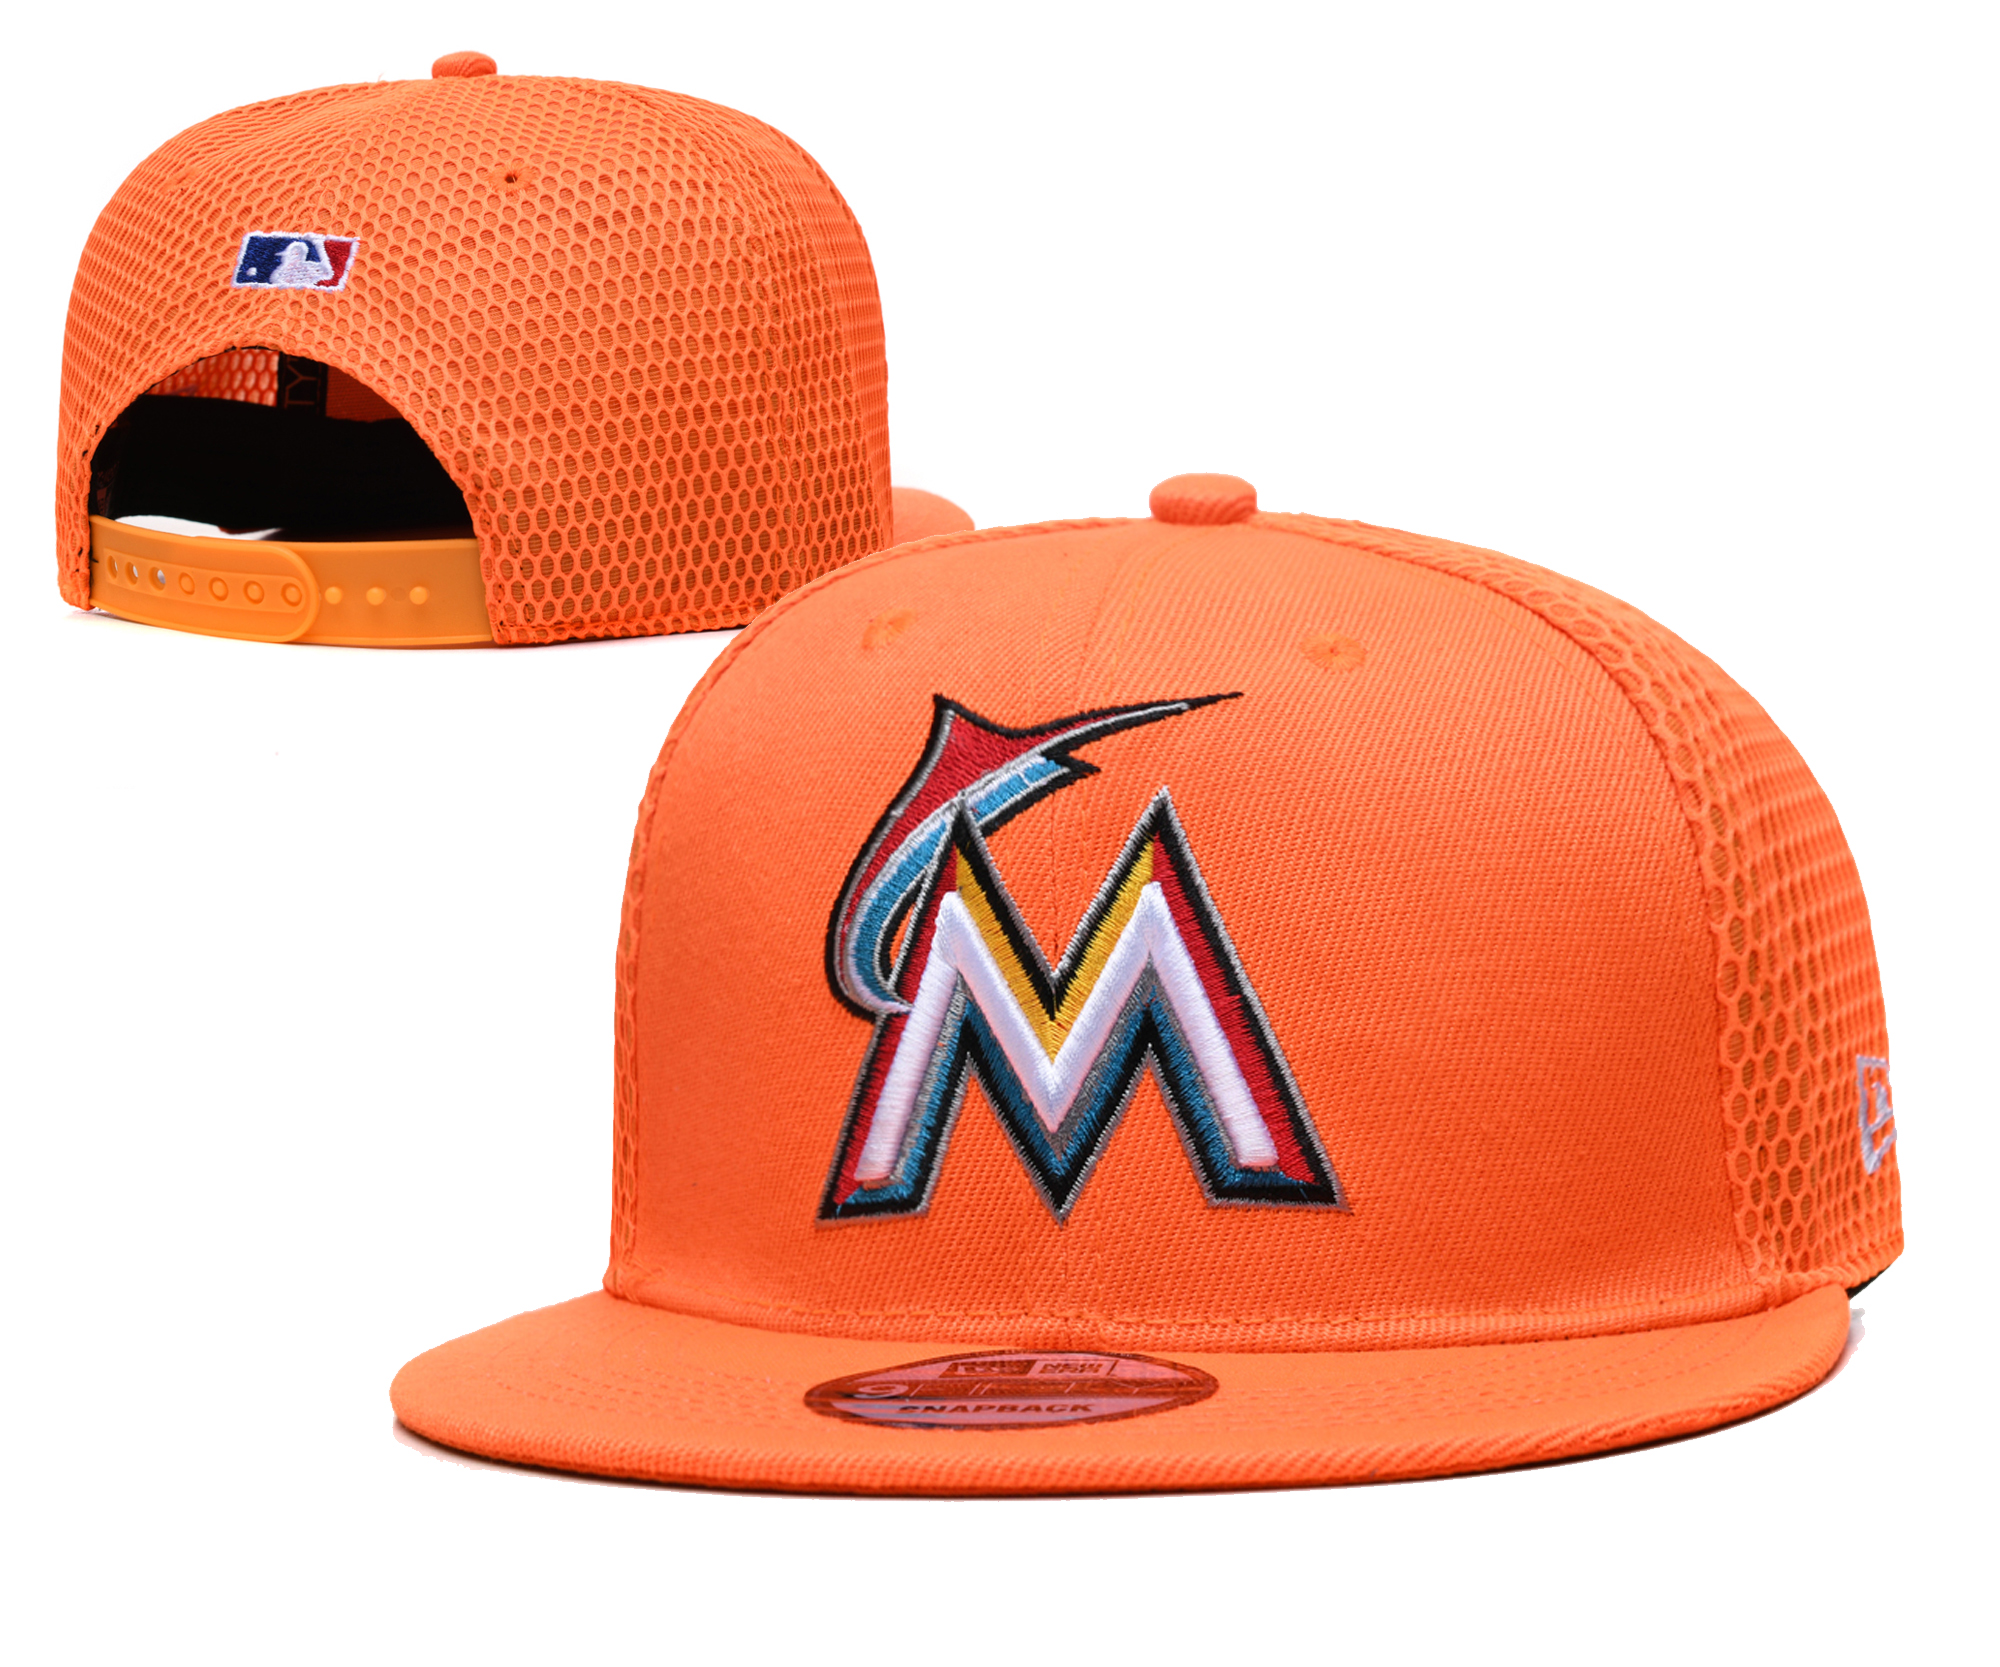 Cheap 2021 MLB Miami Marlins 12 TX hat